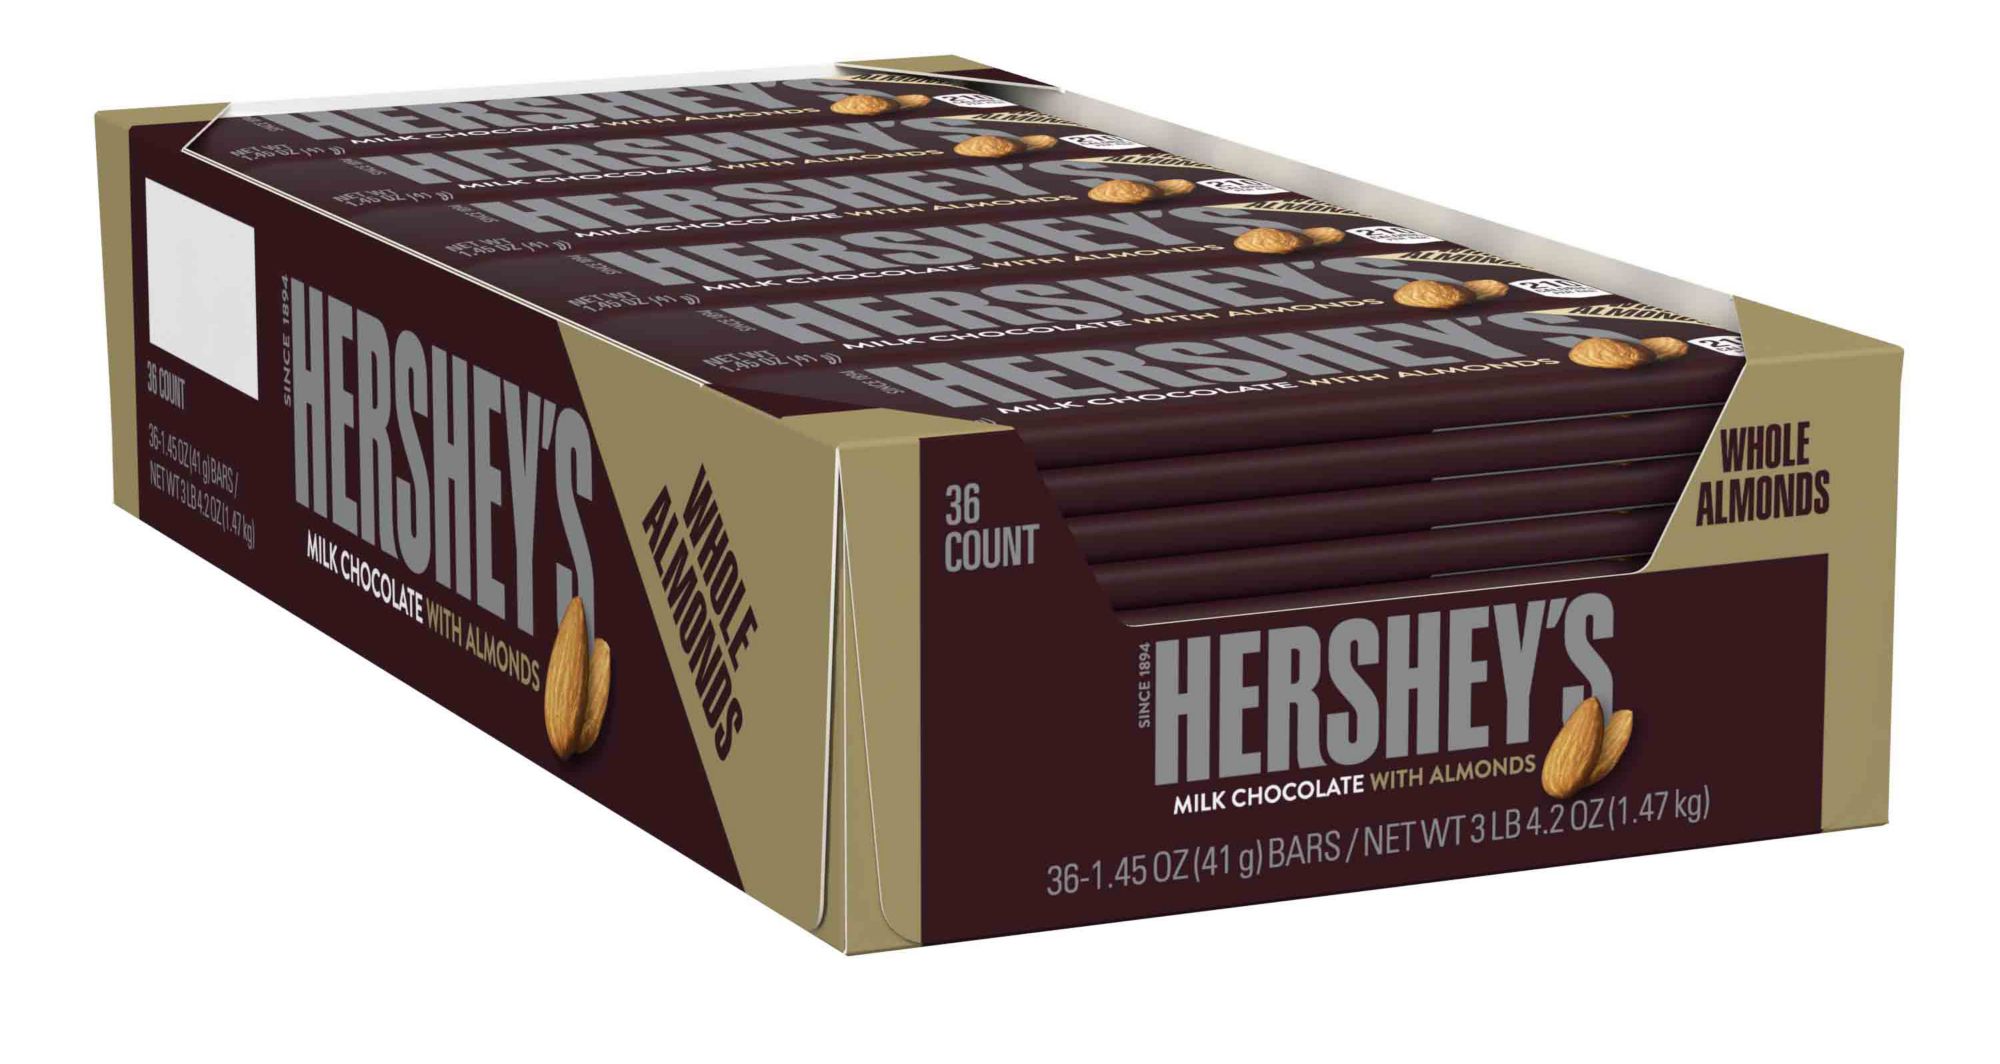 Hershey's Milk Chocolate with Almonds Bars, 36 ct.